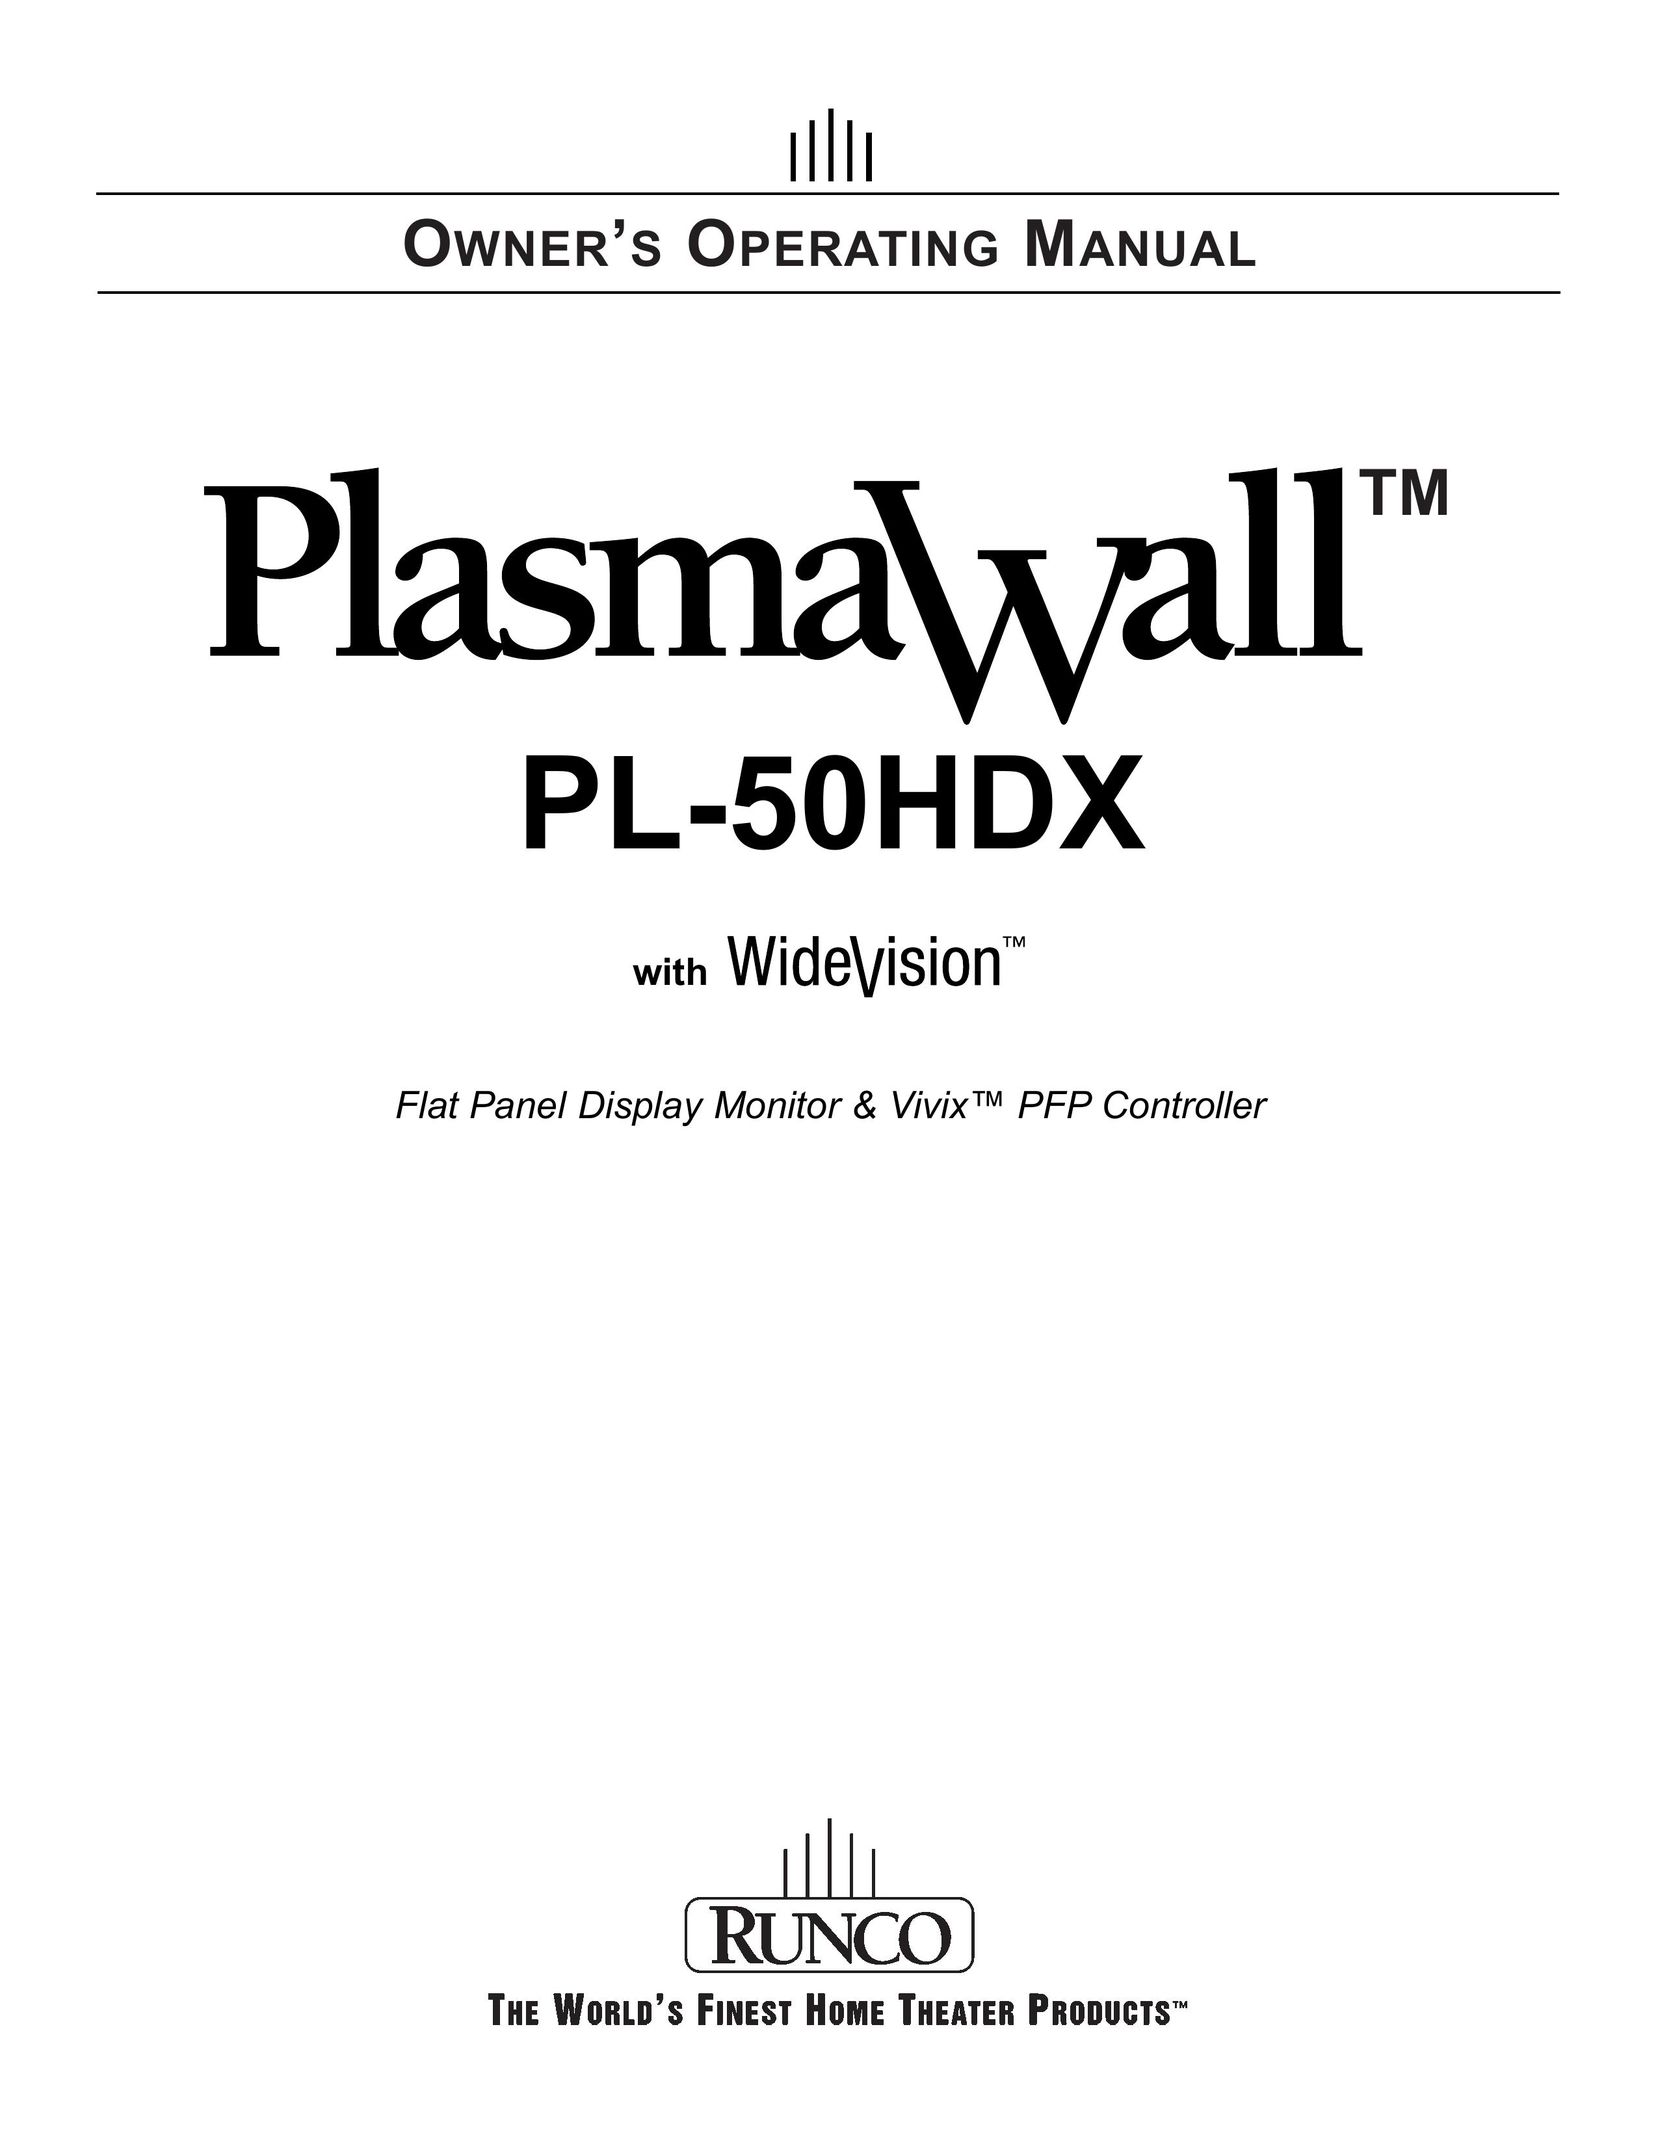 Runco PlasmaWall Flat Panel Television User Manual